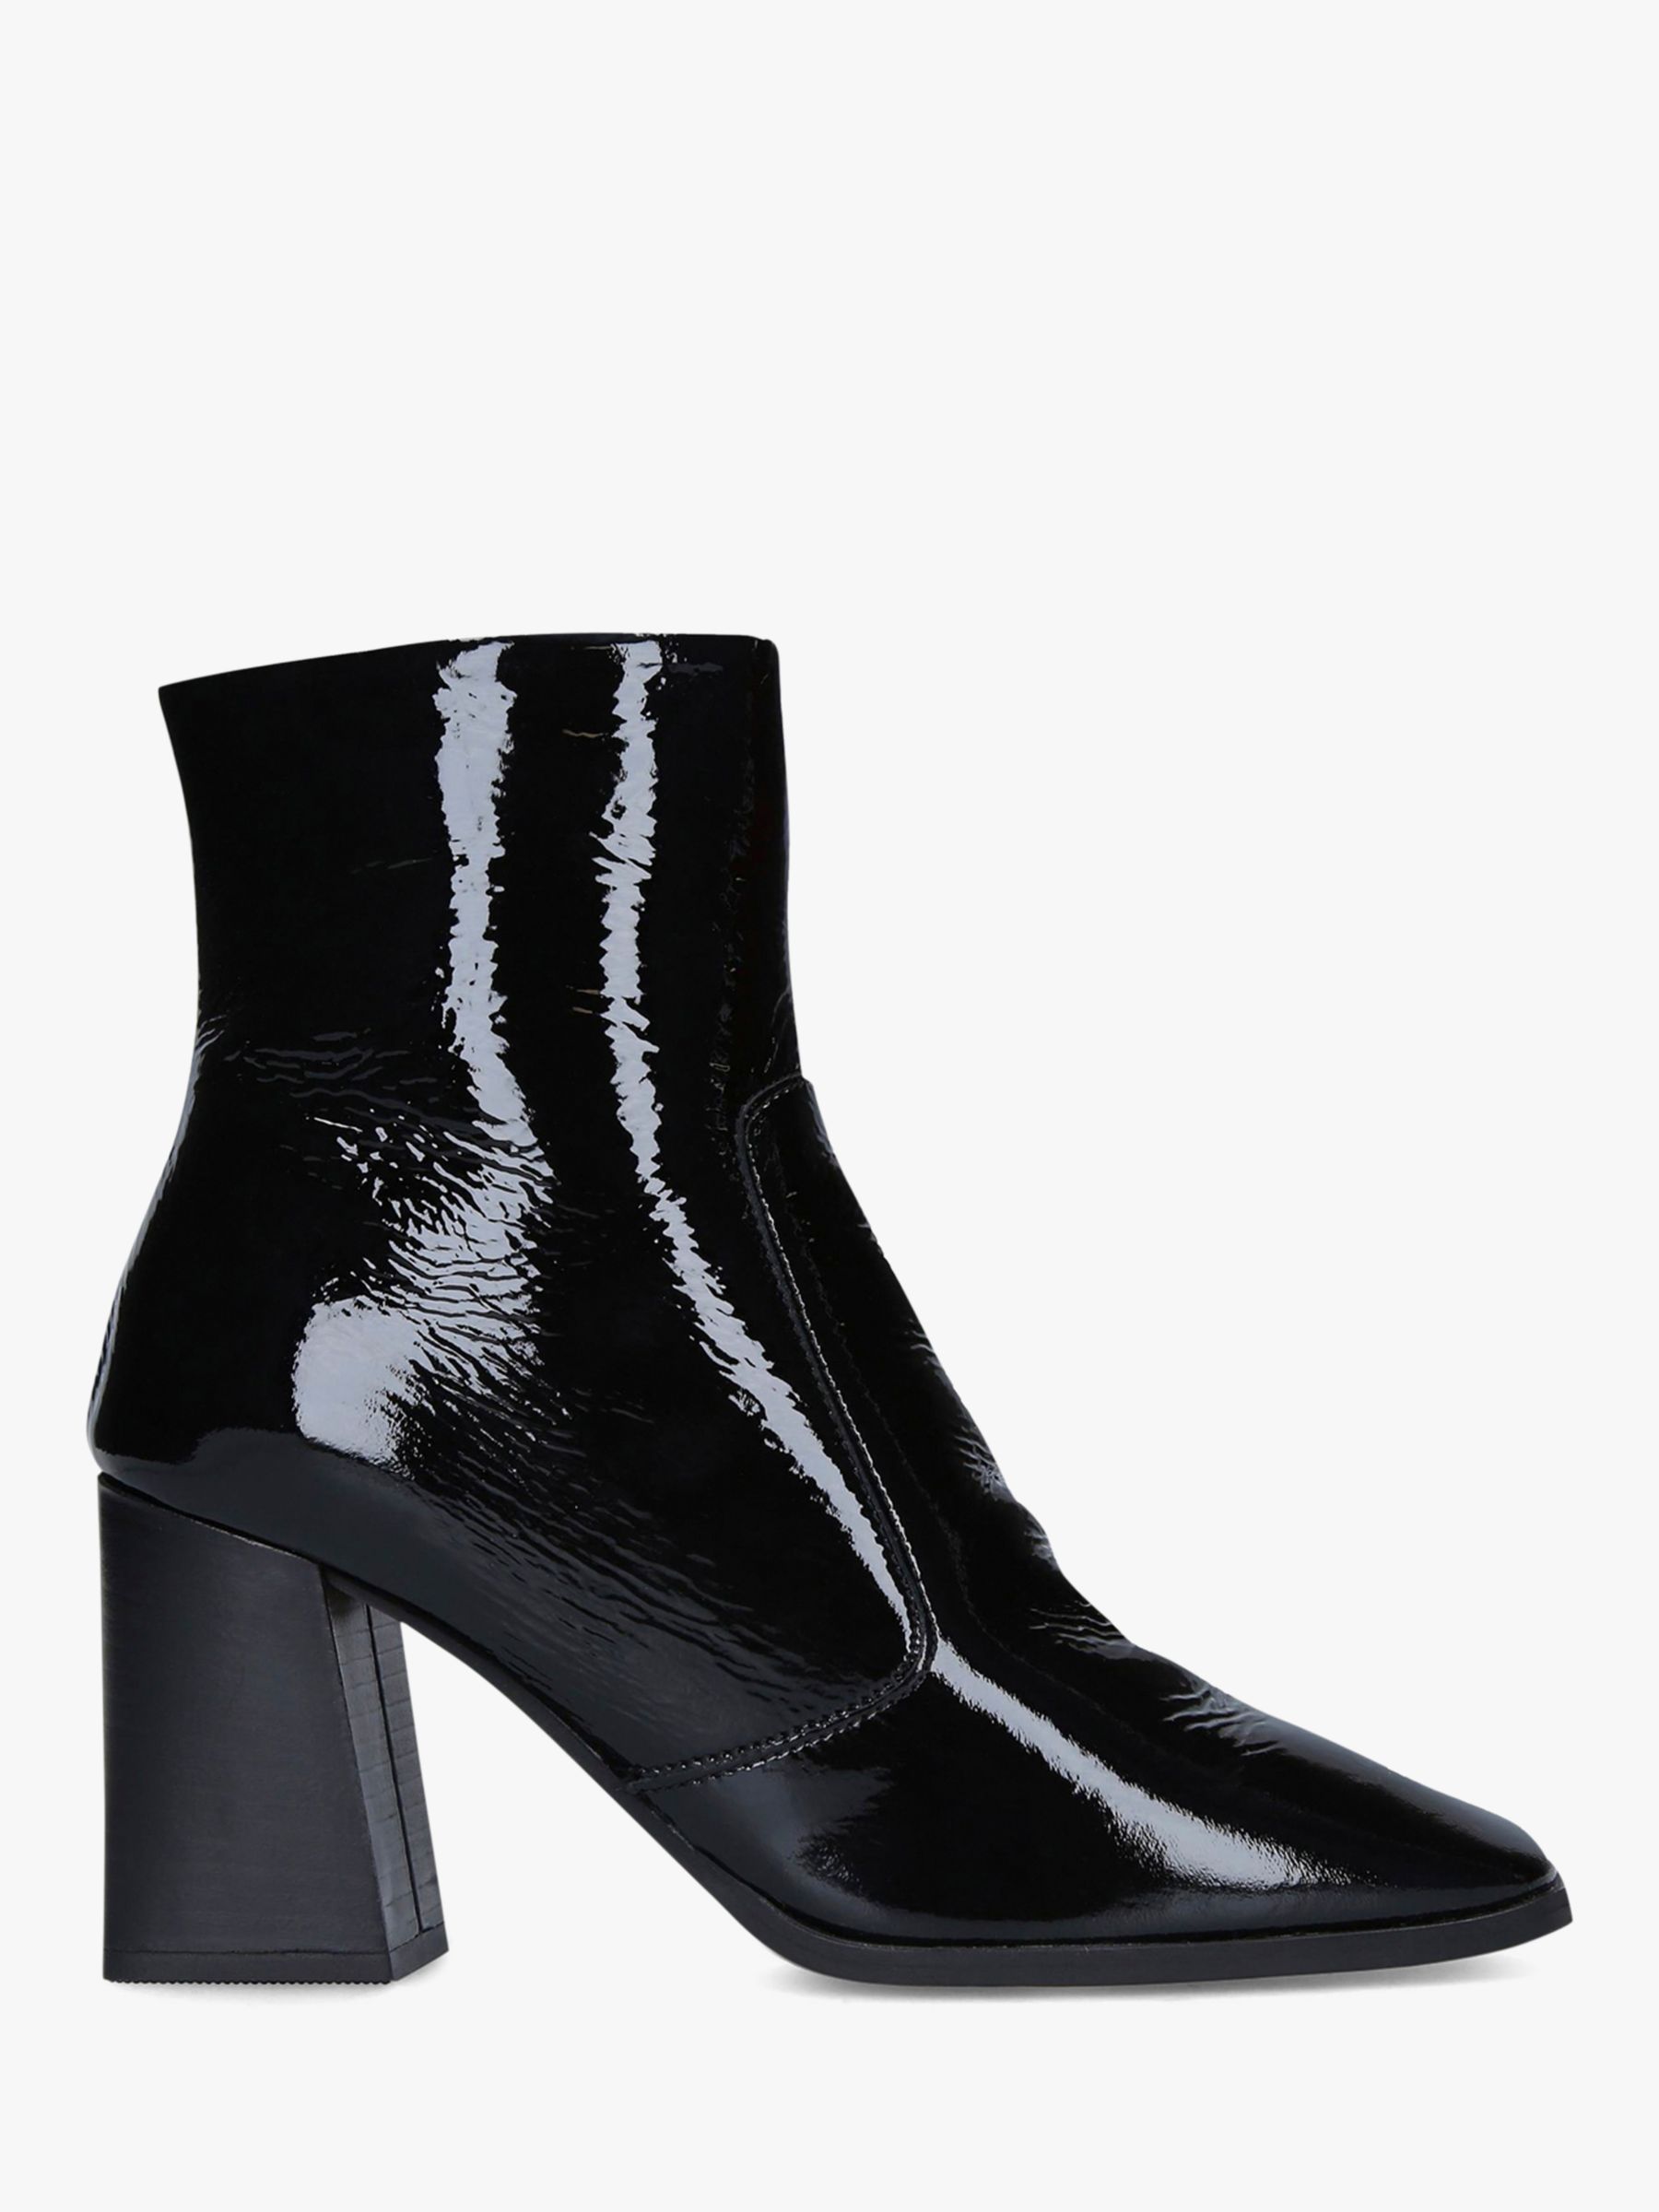 Carvela Softly Patent Square Toe Ankle Boots, Black